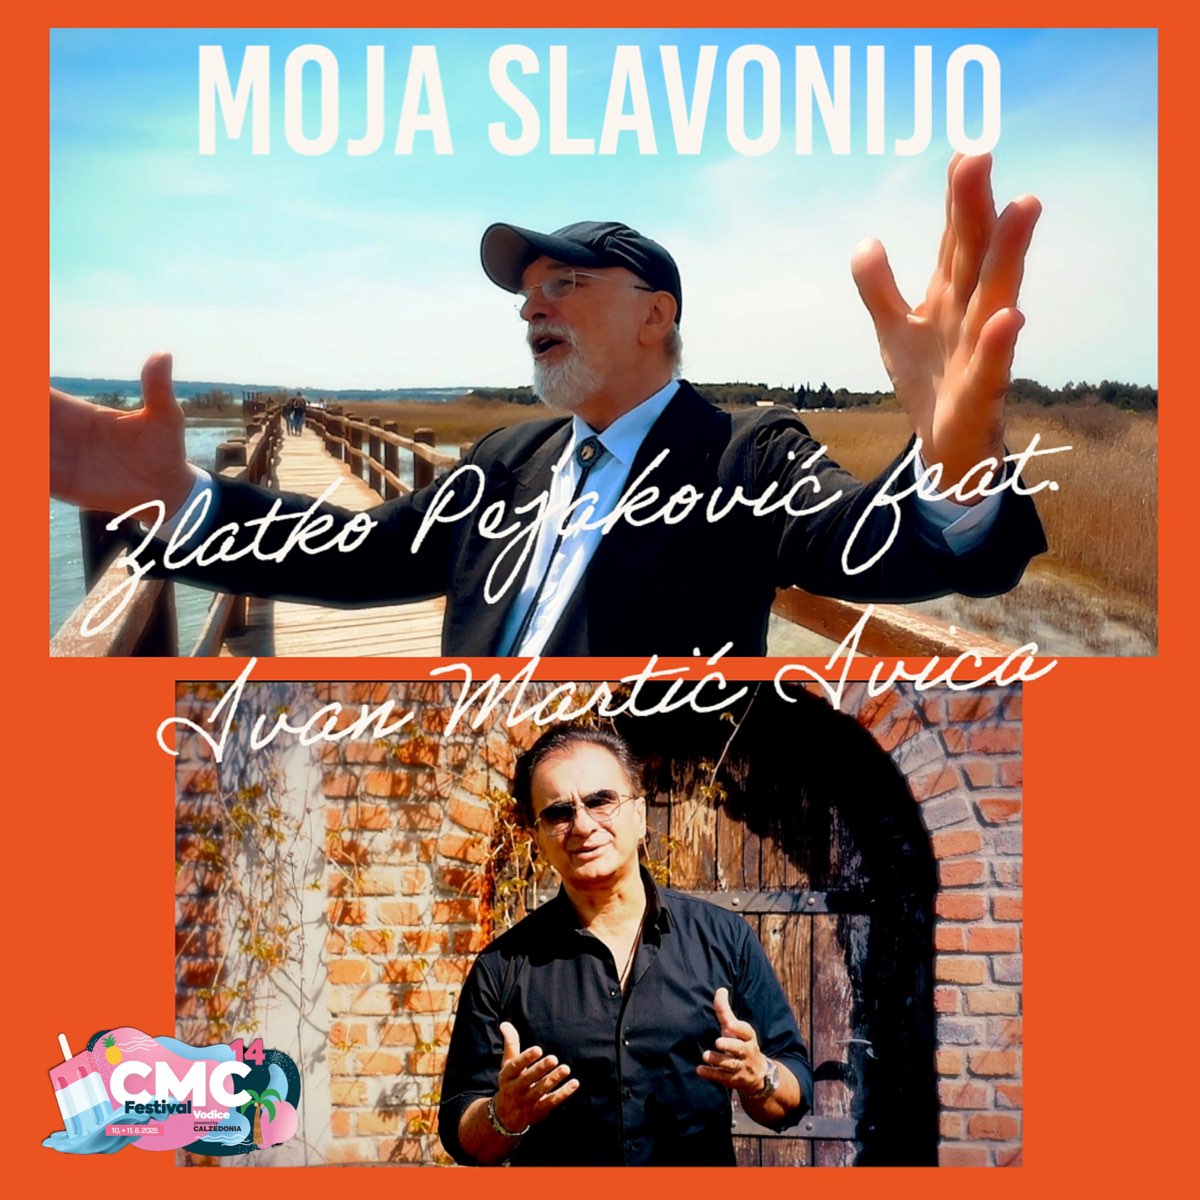 Moja Slavonijo - Single - Album by Ivan Martić Ivica & Zlatko Pejakovic -  Apple Music